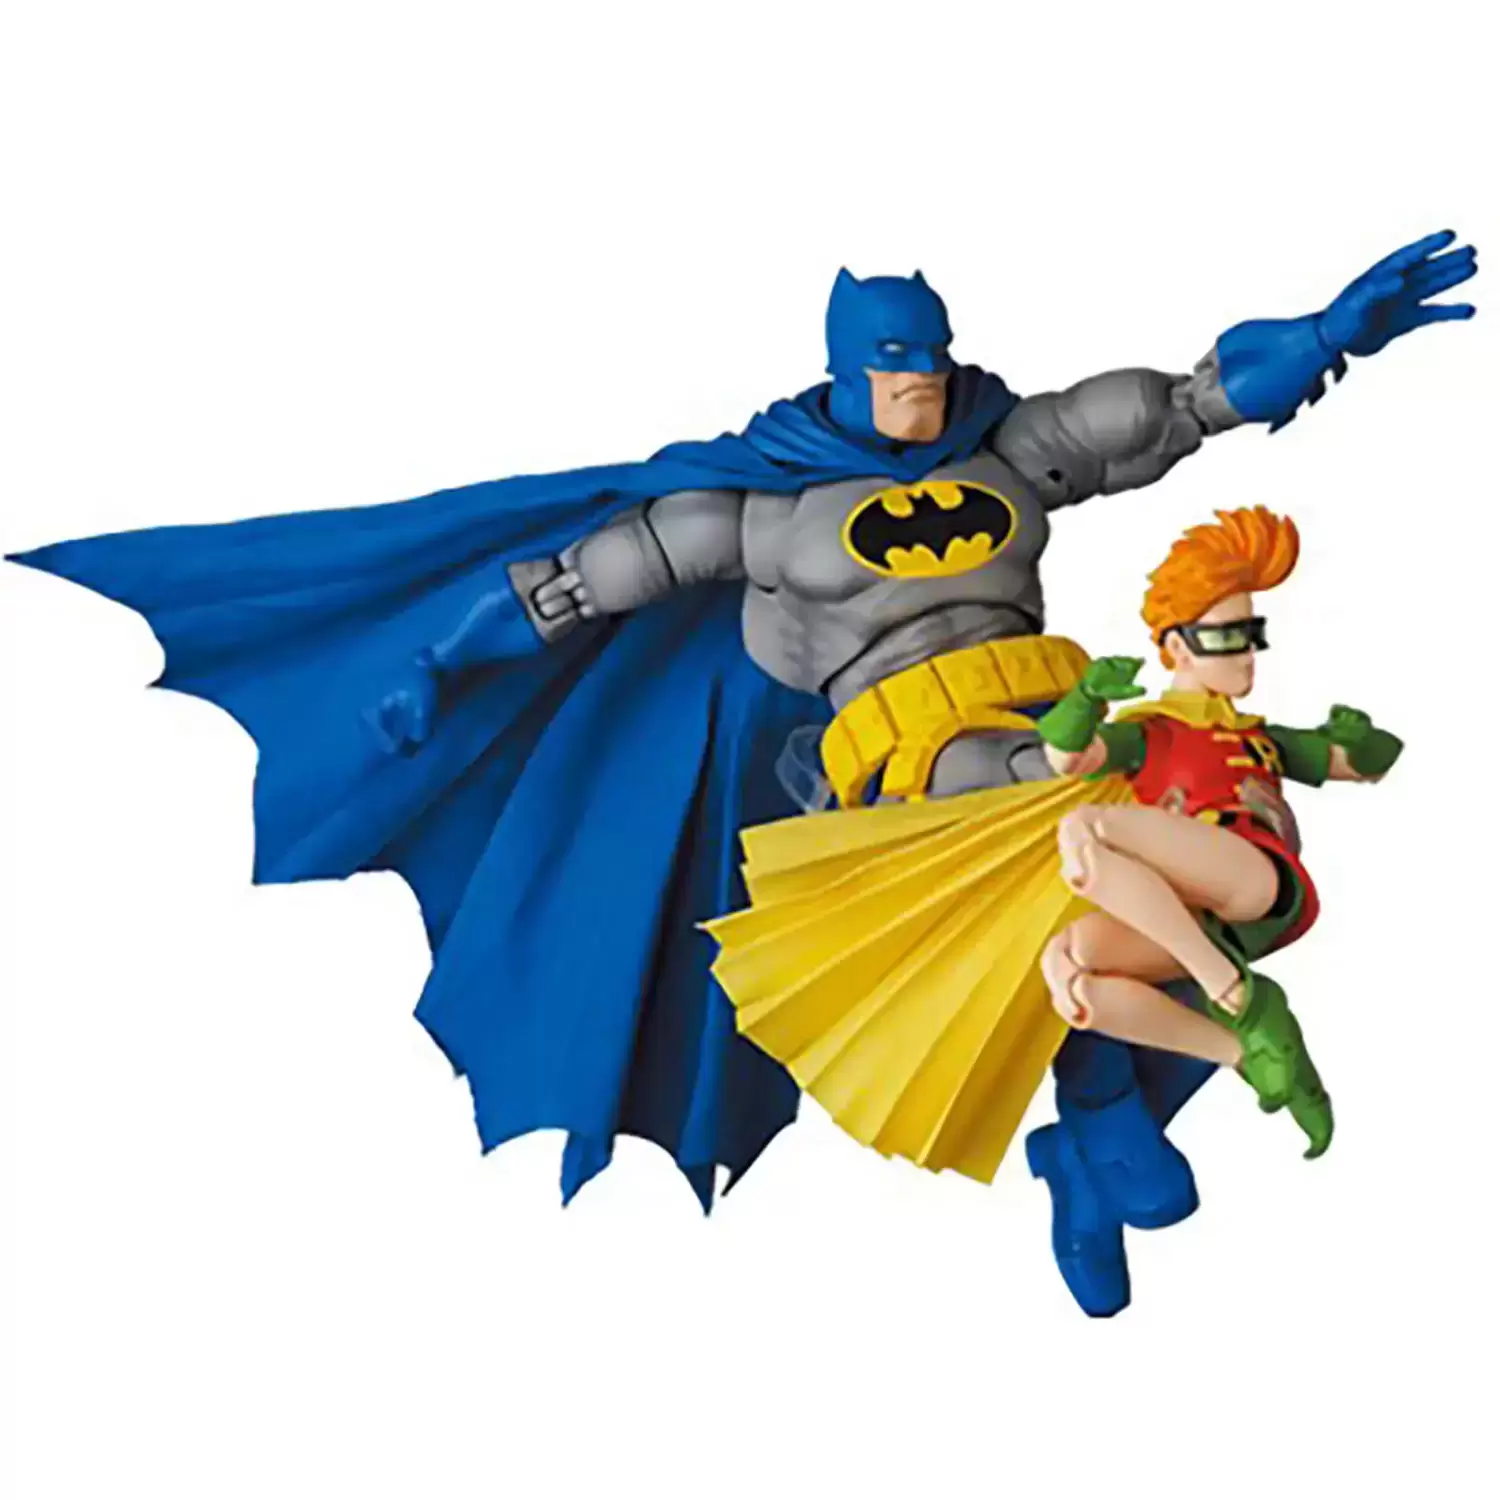 MAFEX (Medicom Toy) - Batman Blue & Robin - The Dark Knight Returns